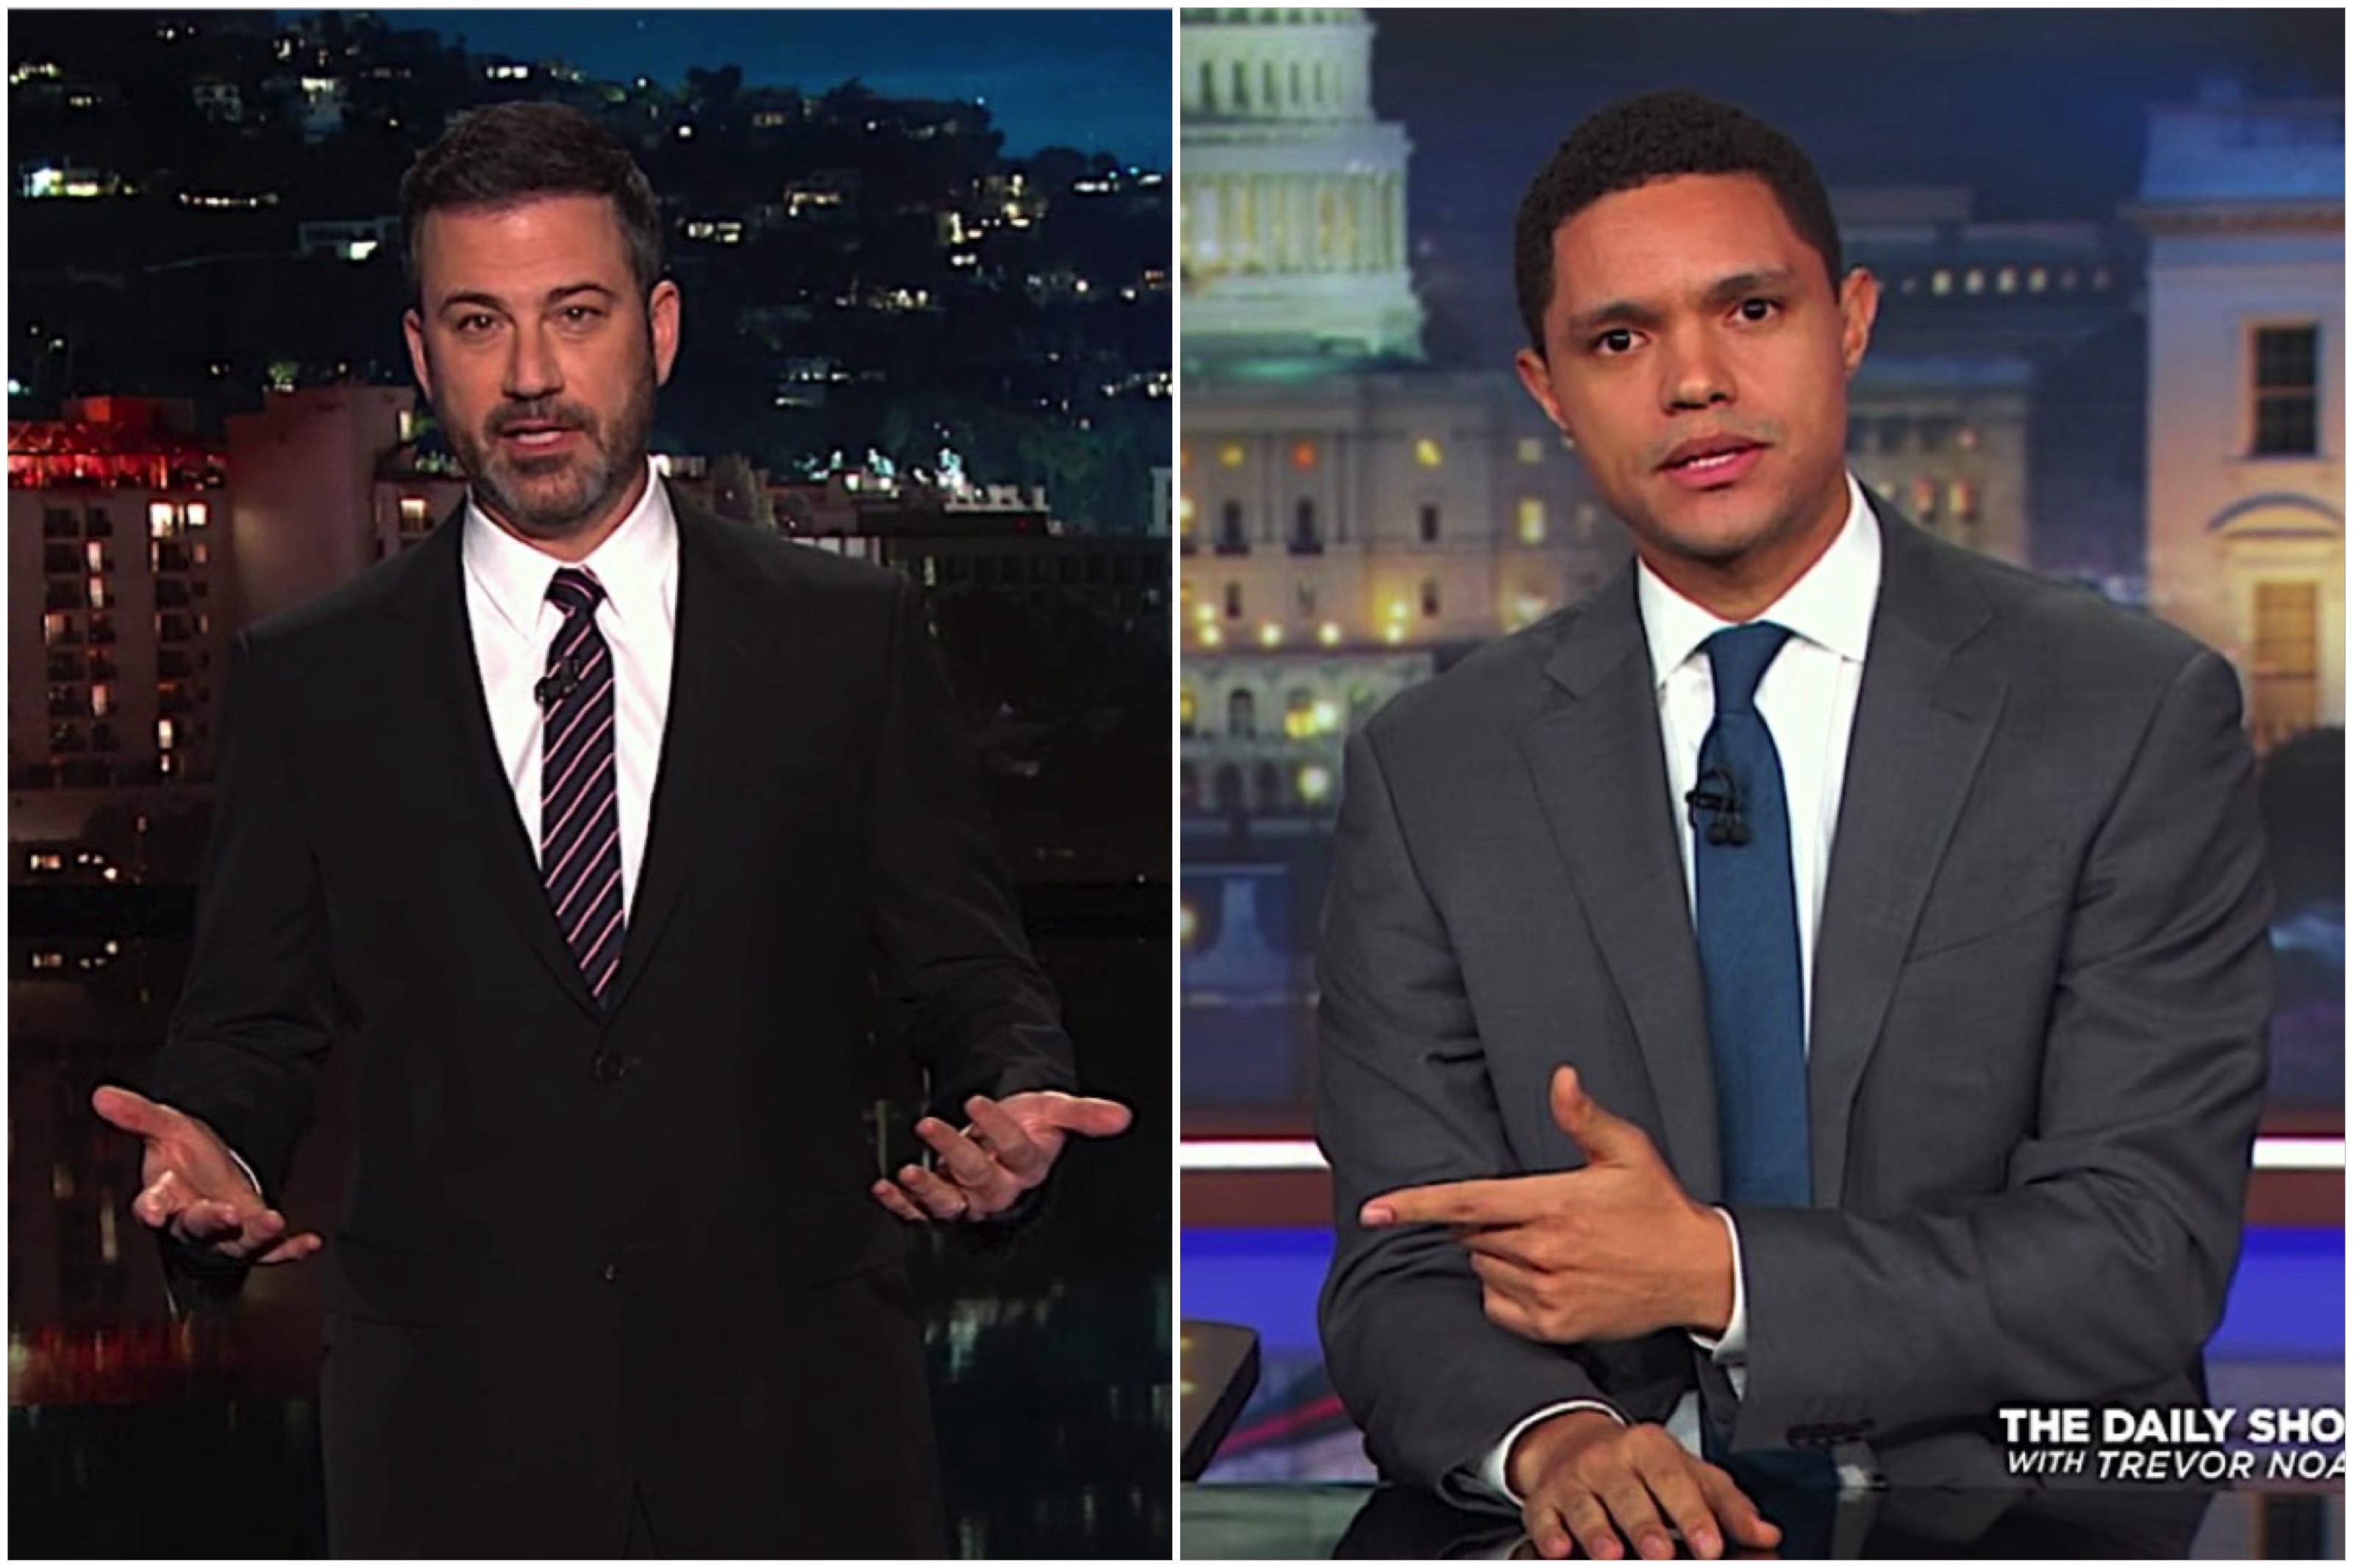 Jimmy Kimmel and Trevor Noah tackled Parkland conspiracists